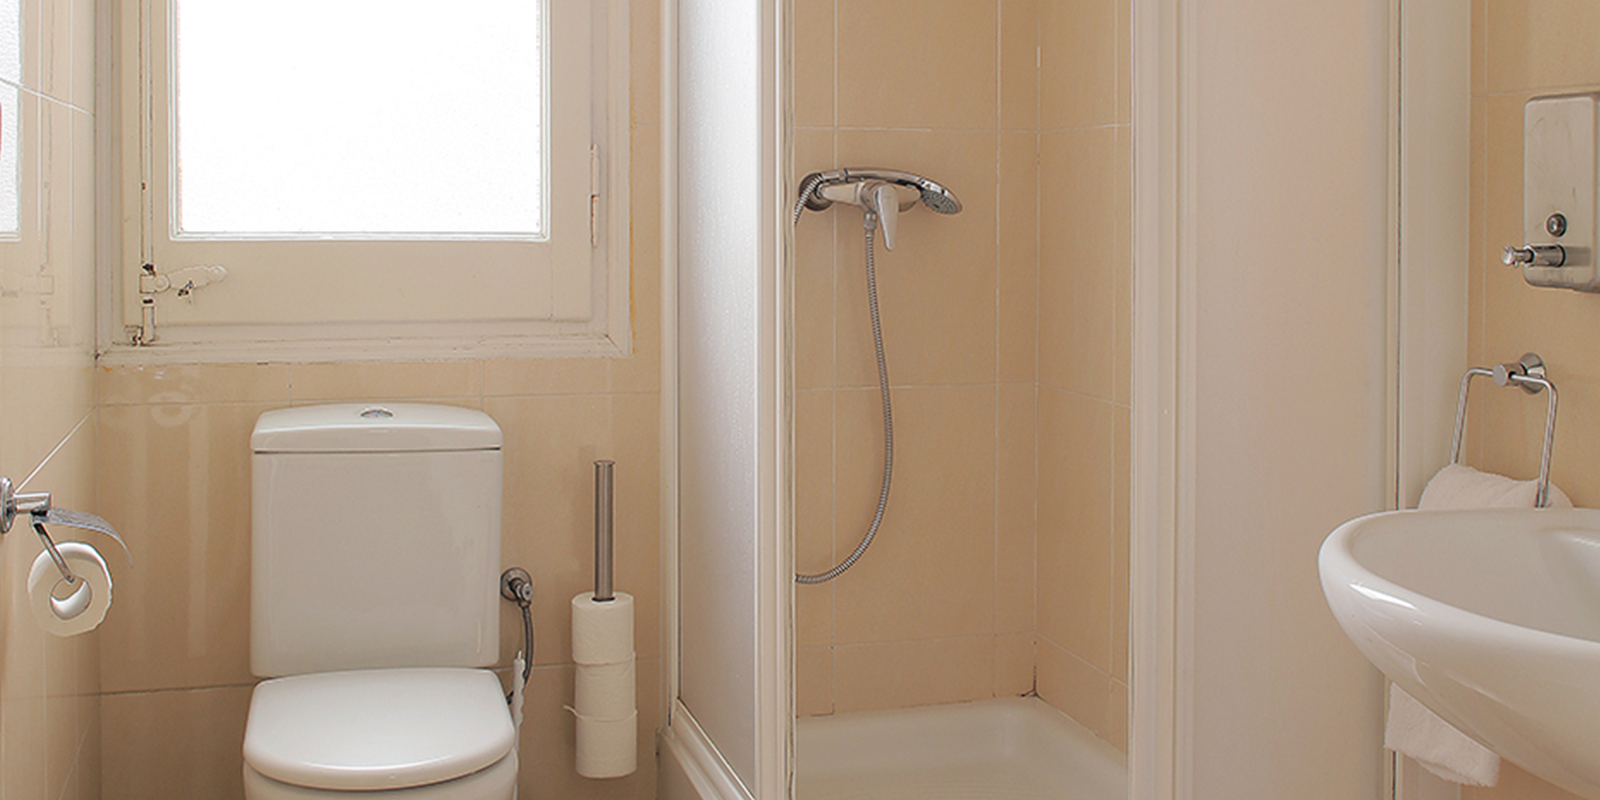 Parquet floors | Shower | Toilet | Bathroom | TV | Refrigerator